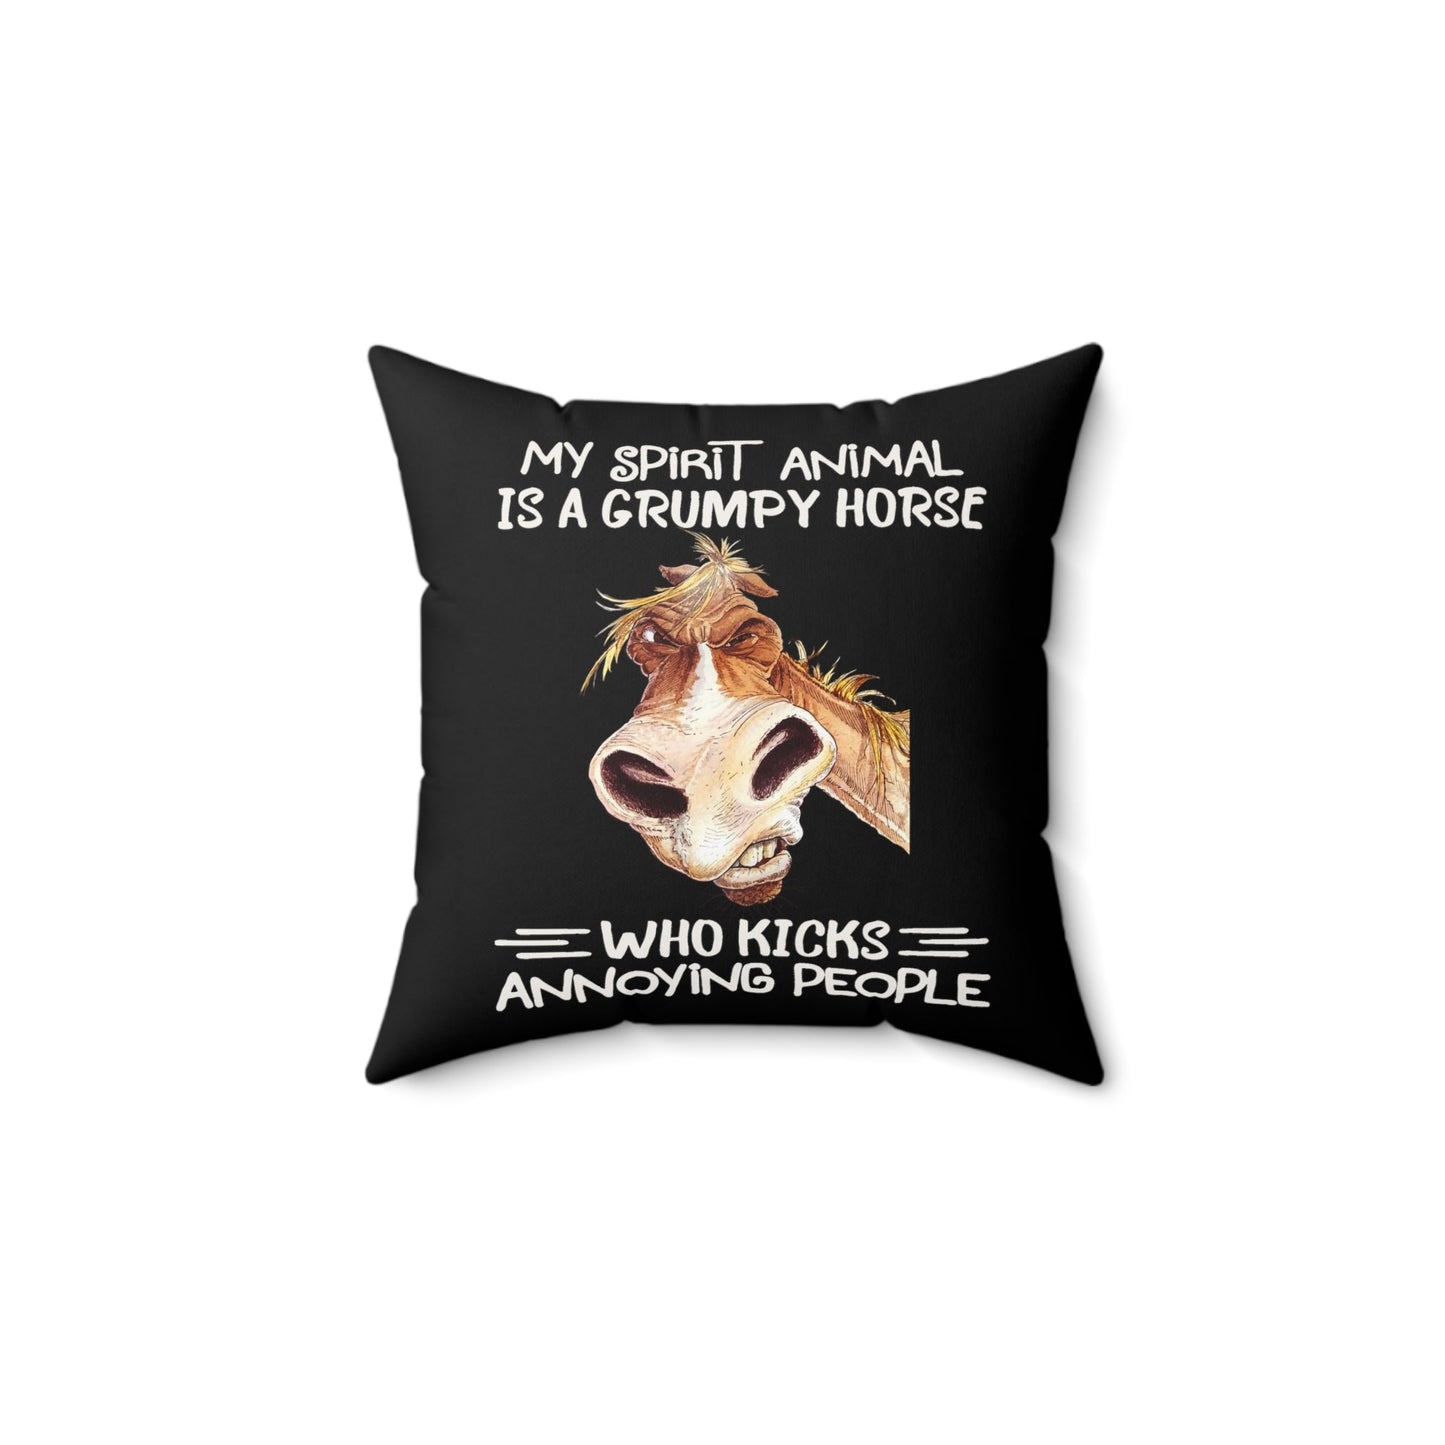 My spirit animal is a grumpy horse who kicks annoying people - Decorative Pillow - FlooredByArt